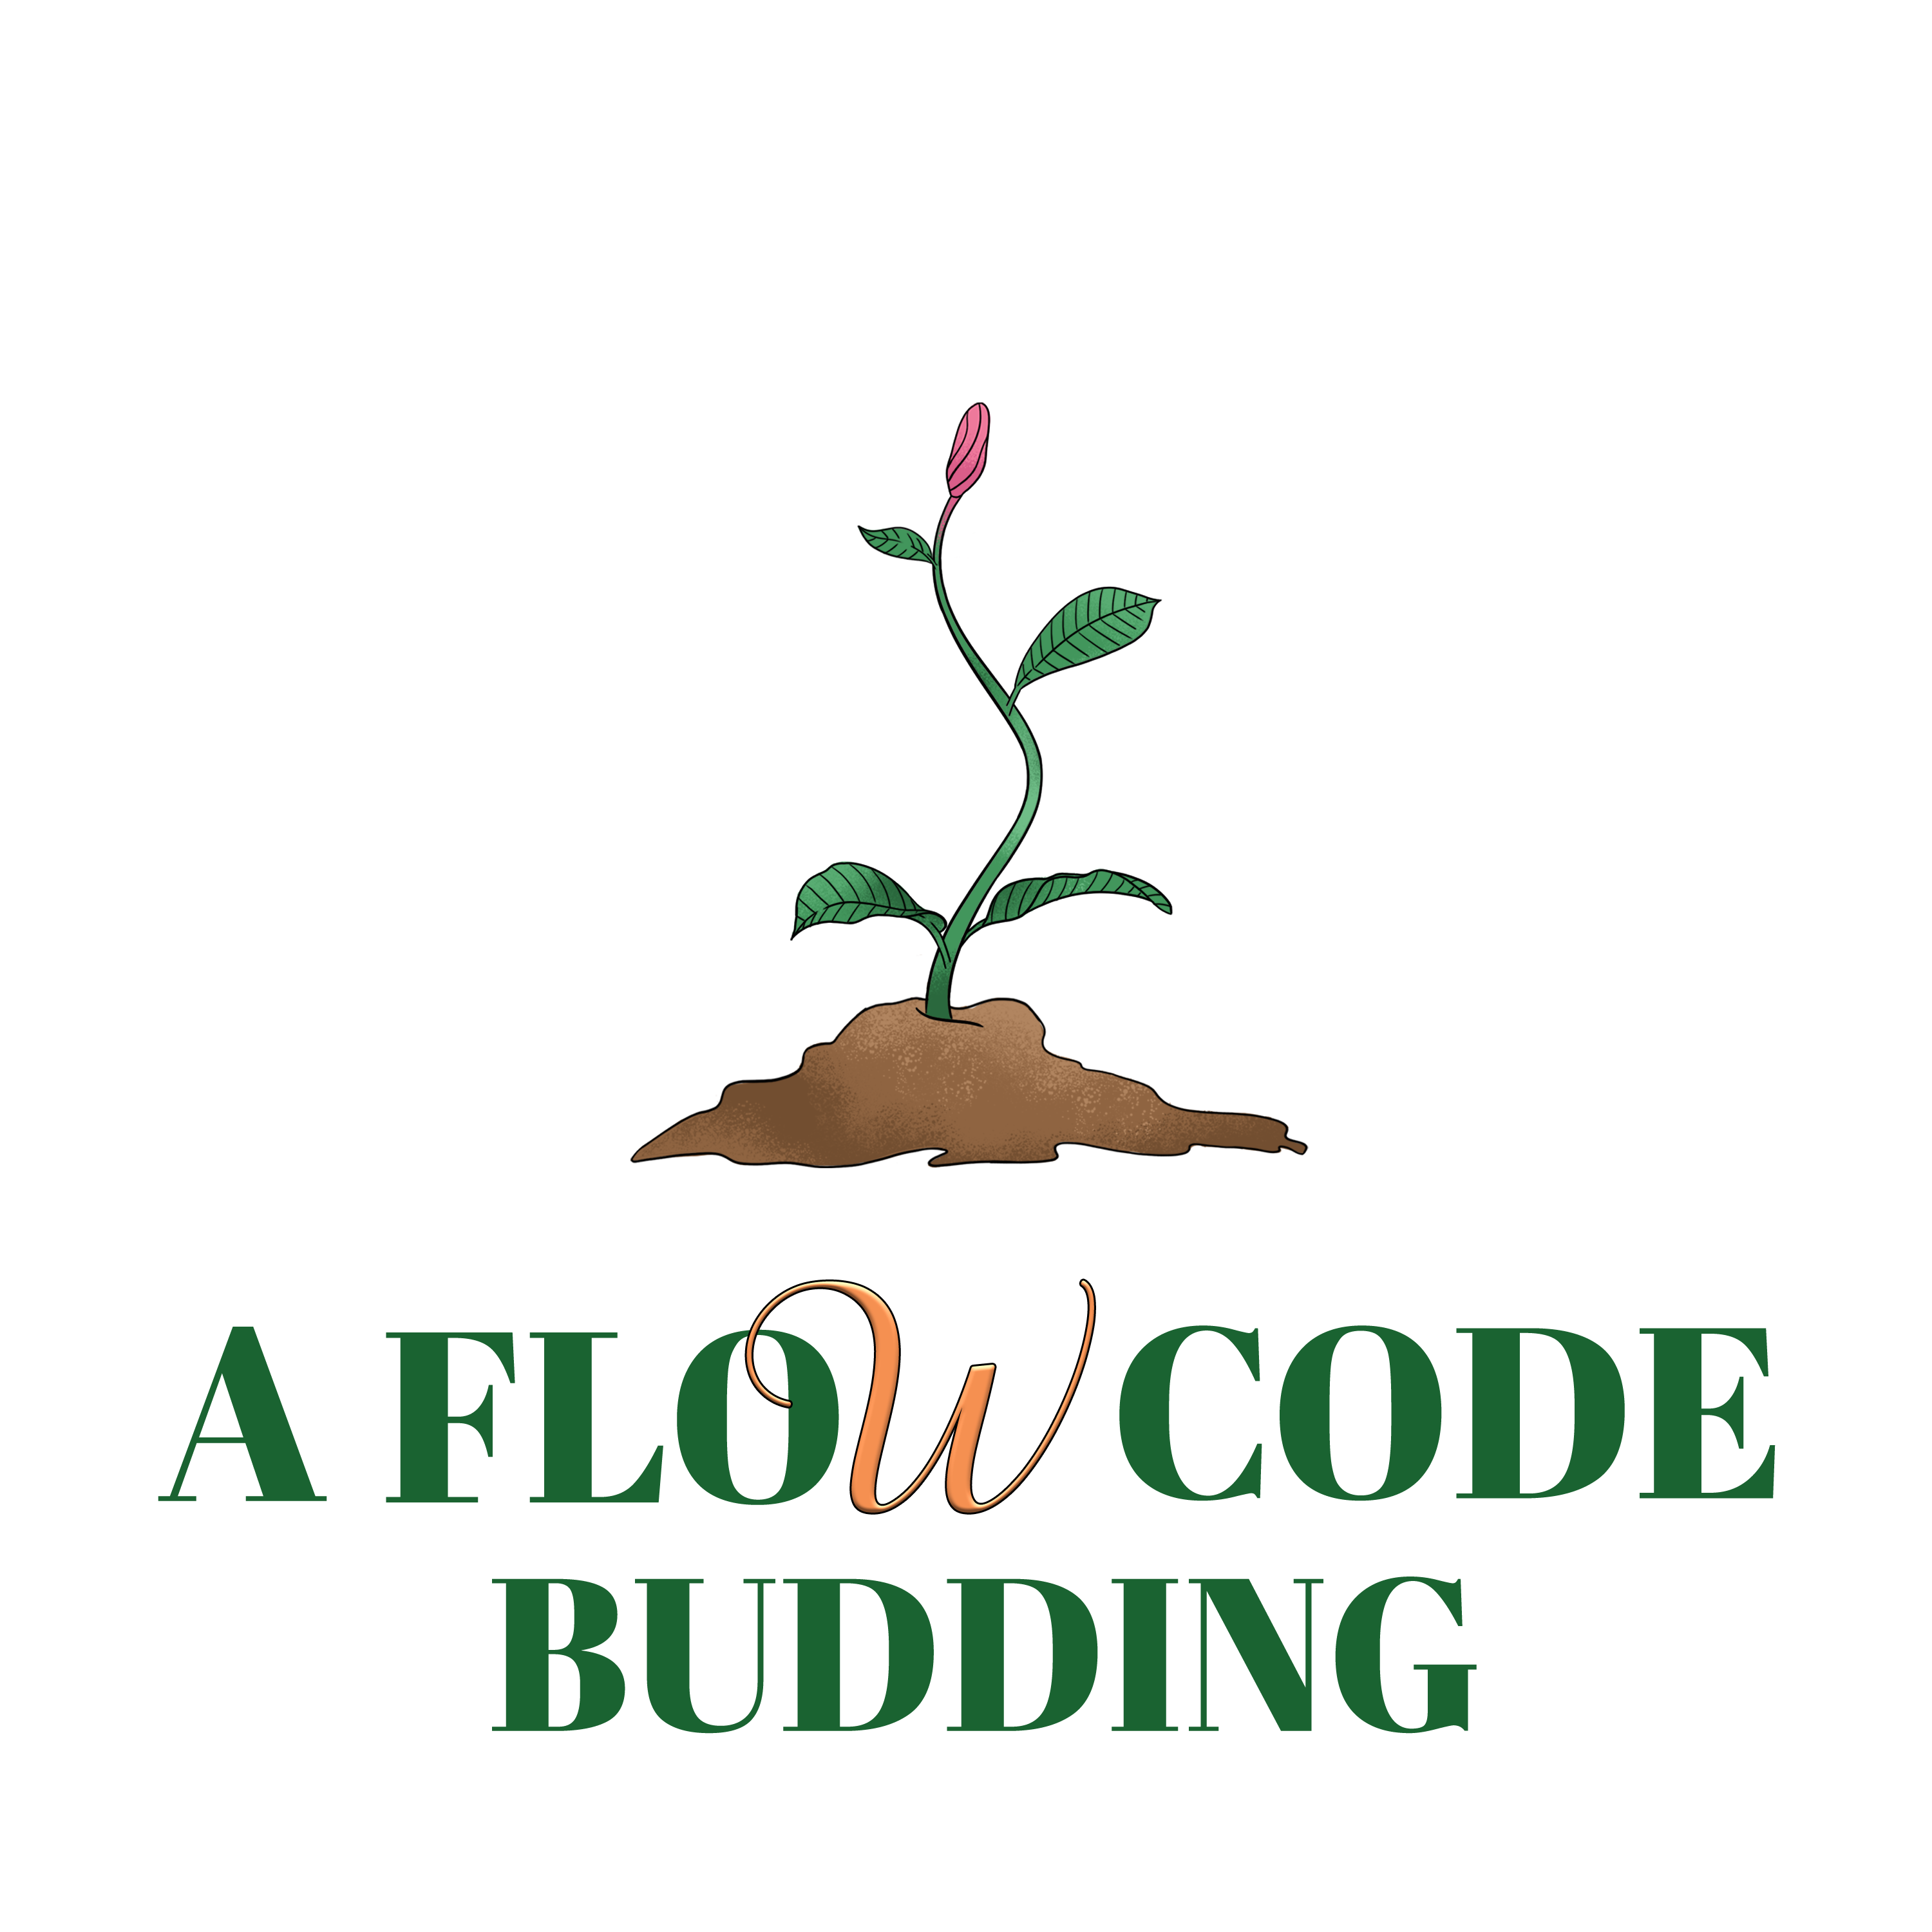 A-Flow-Code-Budding